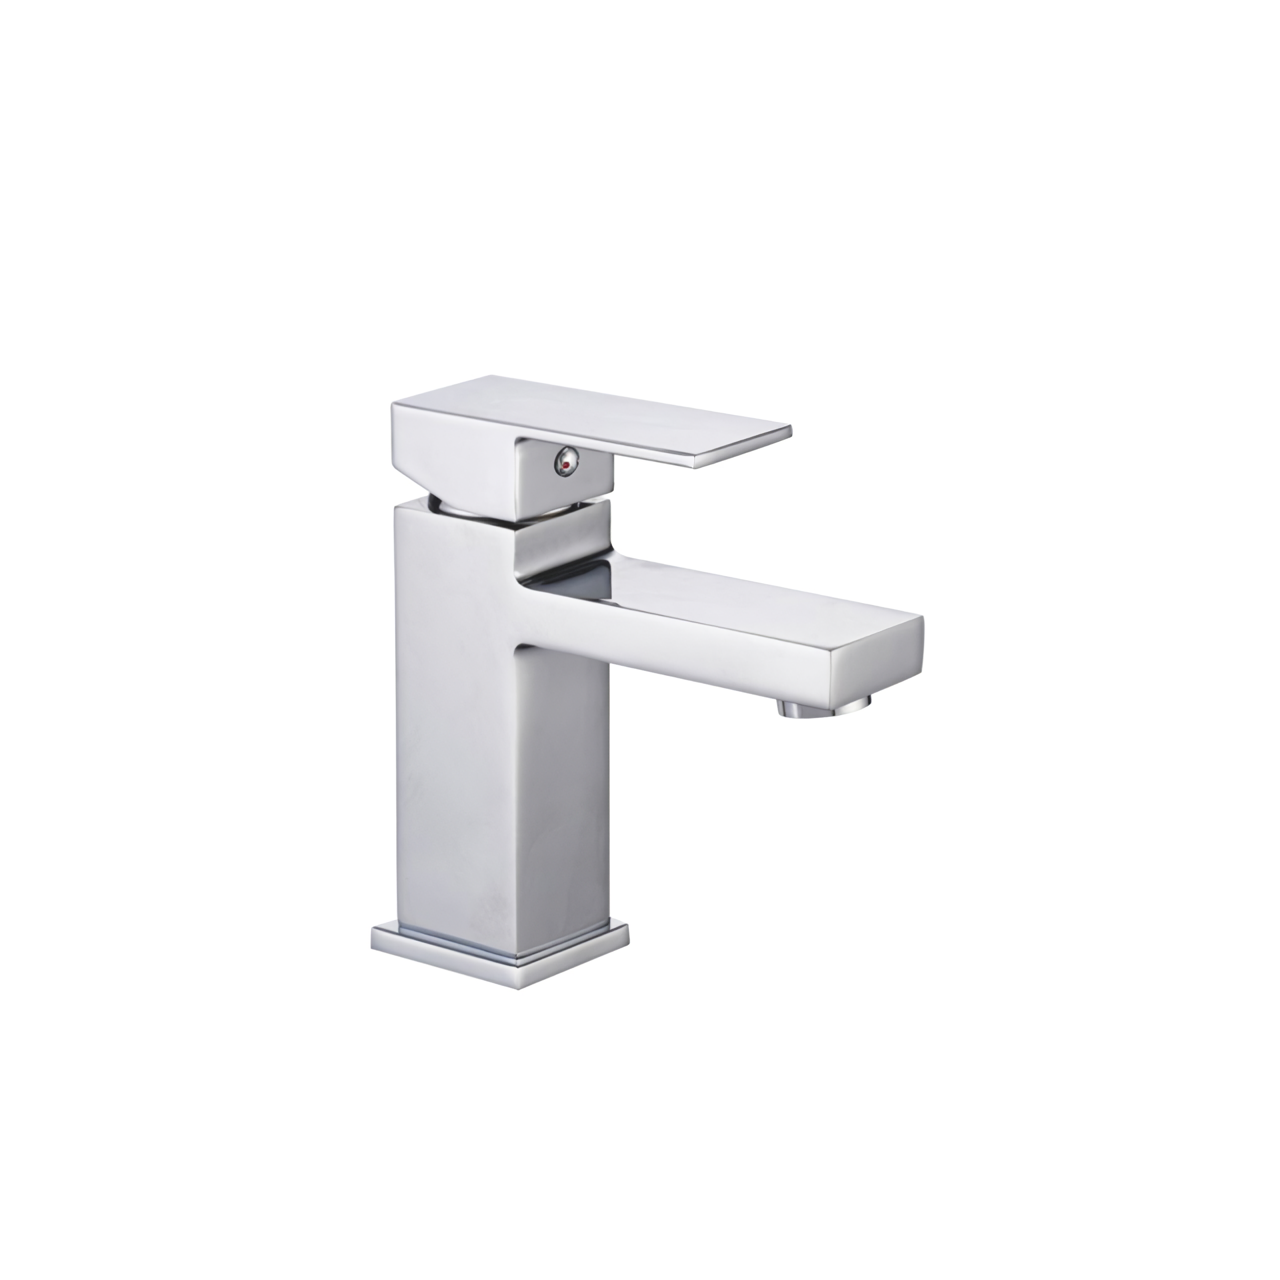 OJ-J2551H Single Handle Bathroom Sink Faucet Lavatory Vessel Faucet for 1 Hole Square Deck Mounted Chrome Stainless Steel Basin Faucet